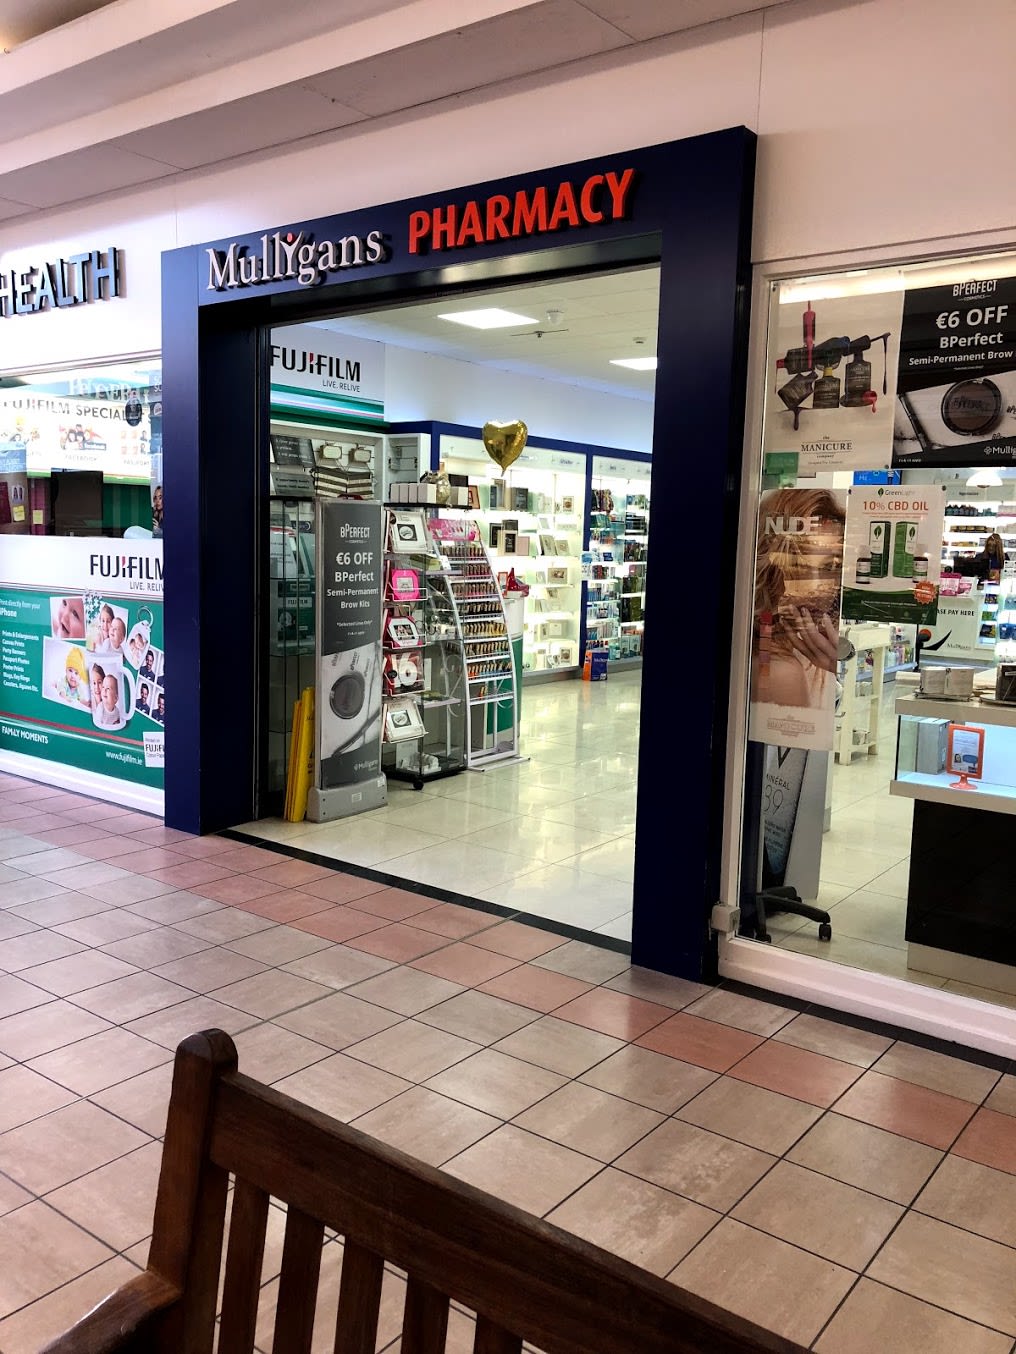 Mulligan's Pharmacy